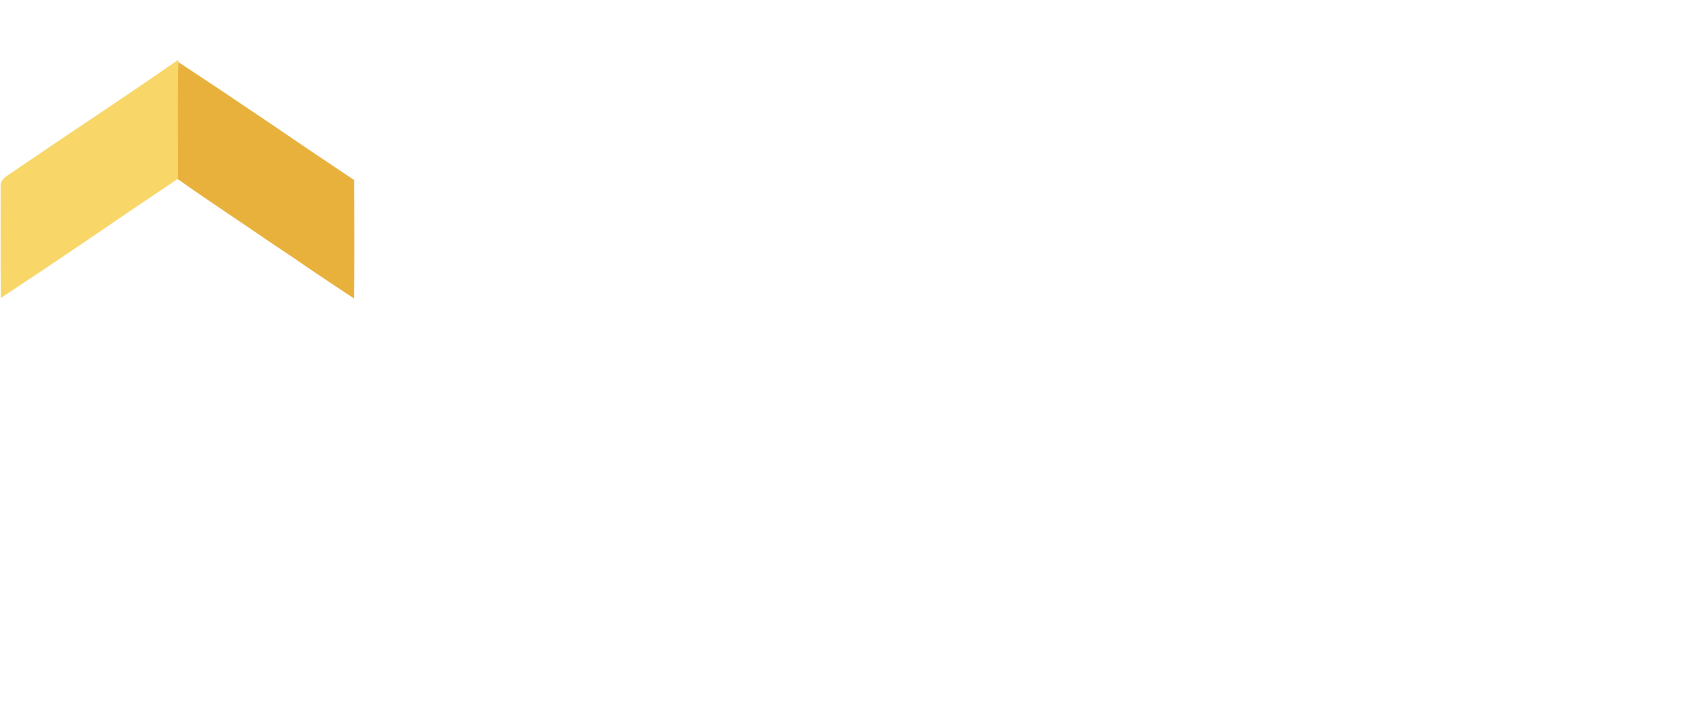 Porch Group logo large for dark backgrounds (transparent PNG)